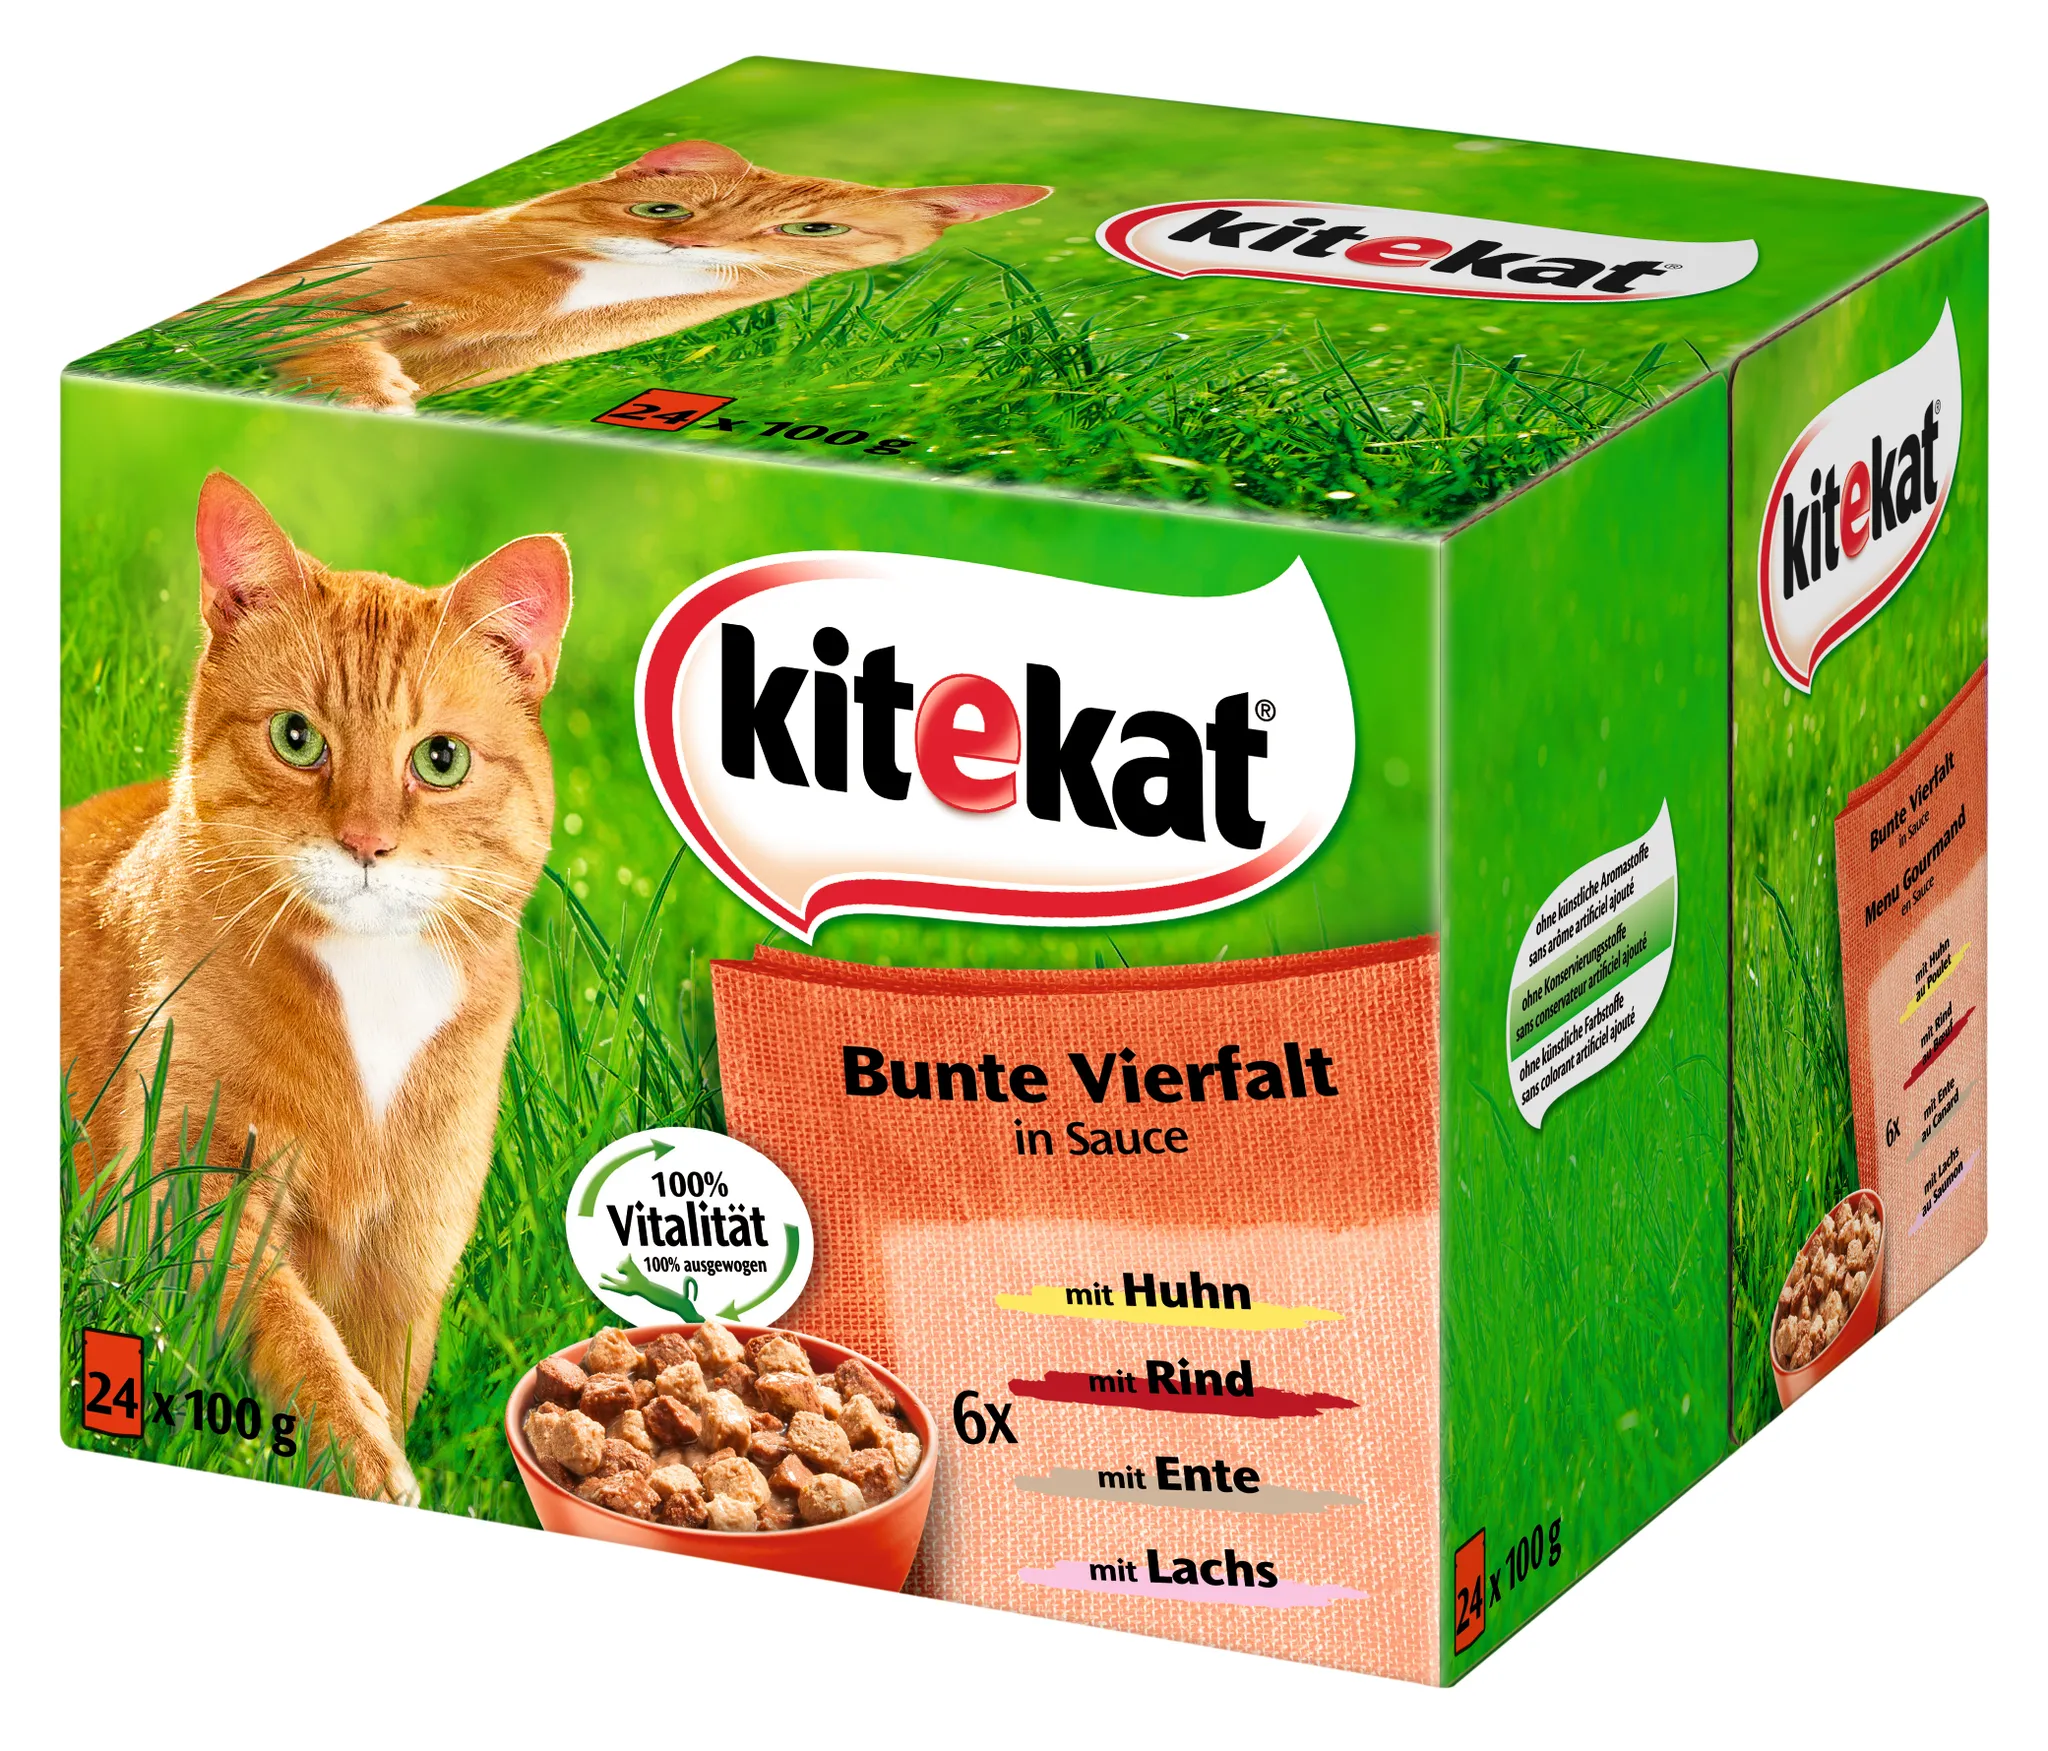 Купить пакетик корма для кошки. Китекет 15. Kitekat 800g. Китикет корм для кошек пакетики. Kitekat влажный корм.